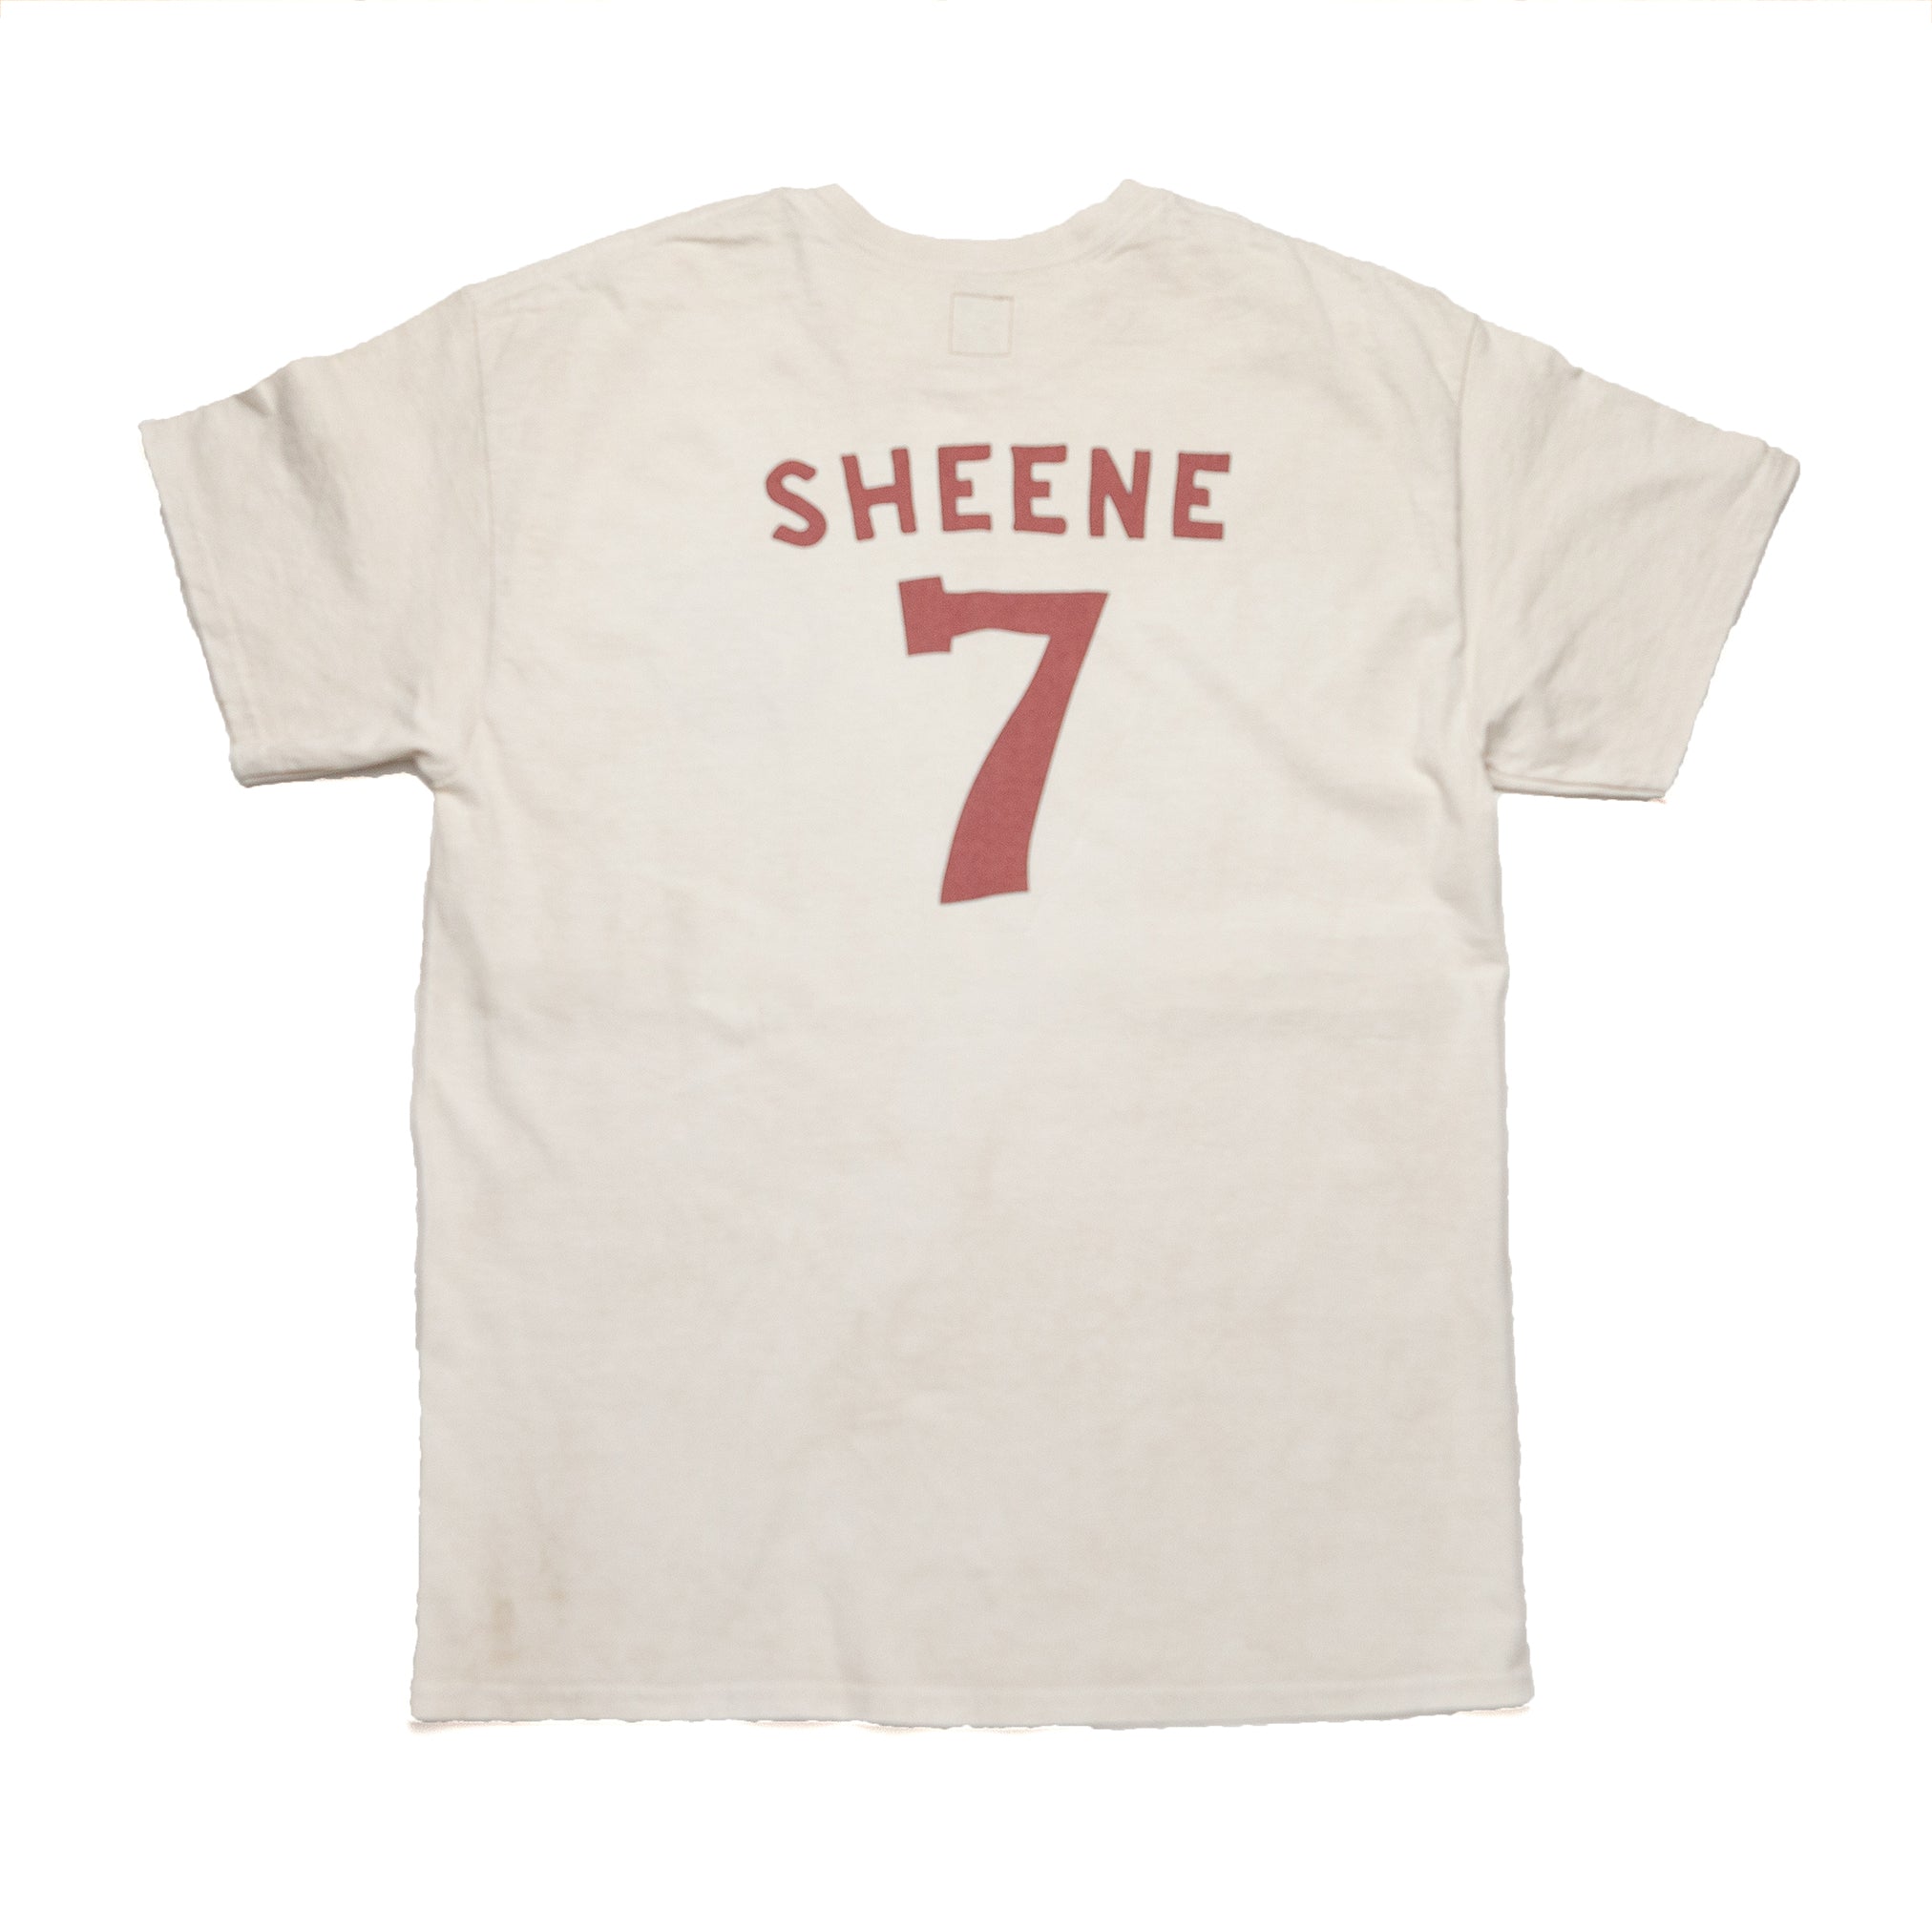 Sheene 7 Tee